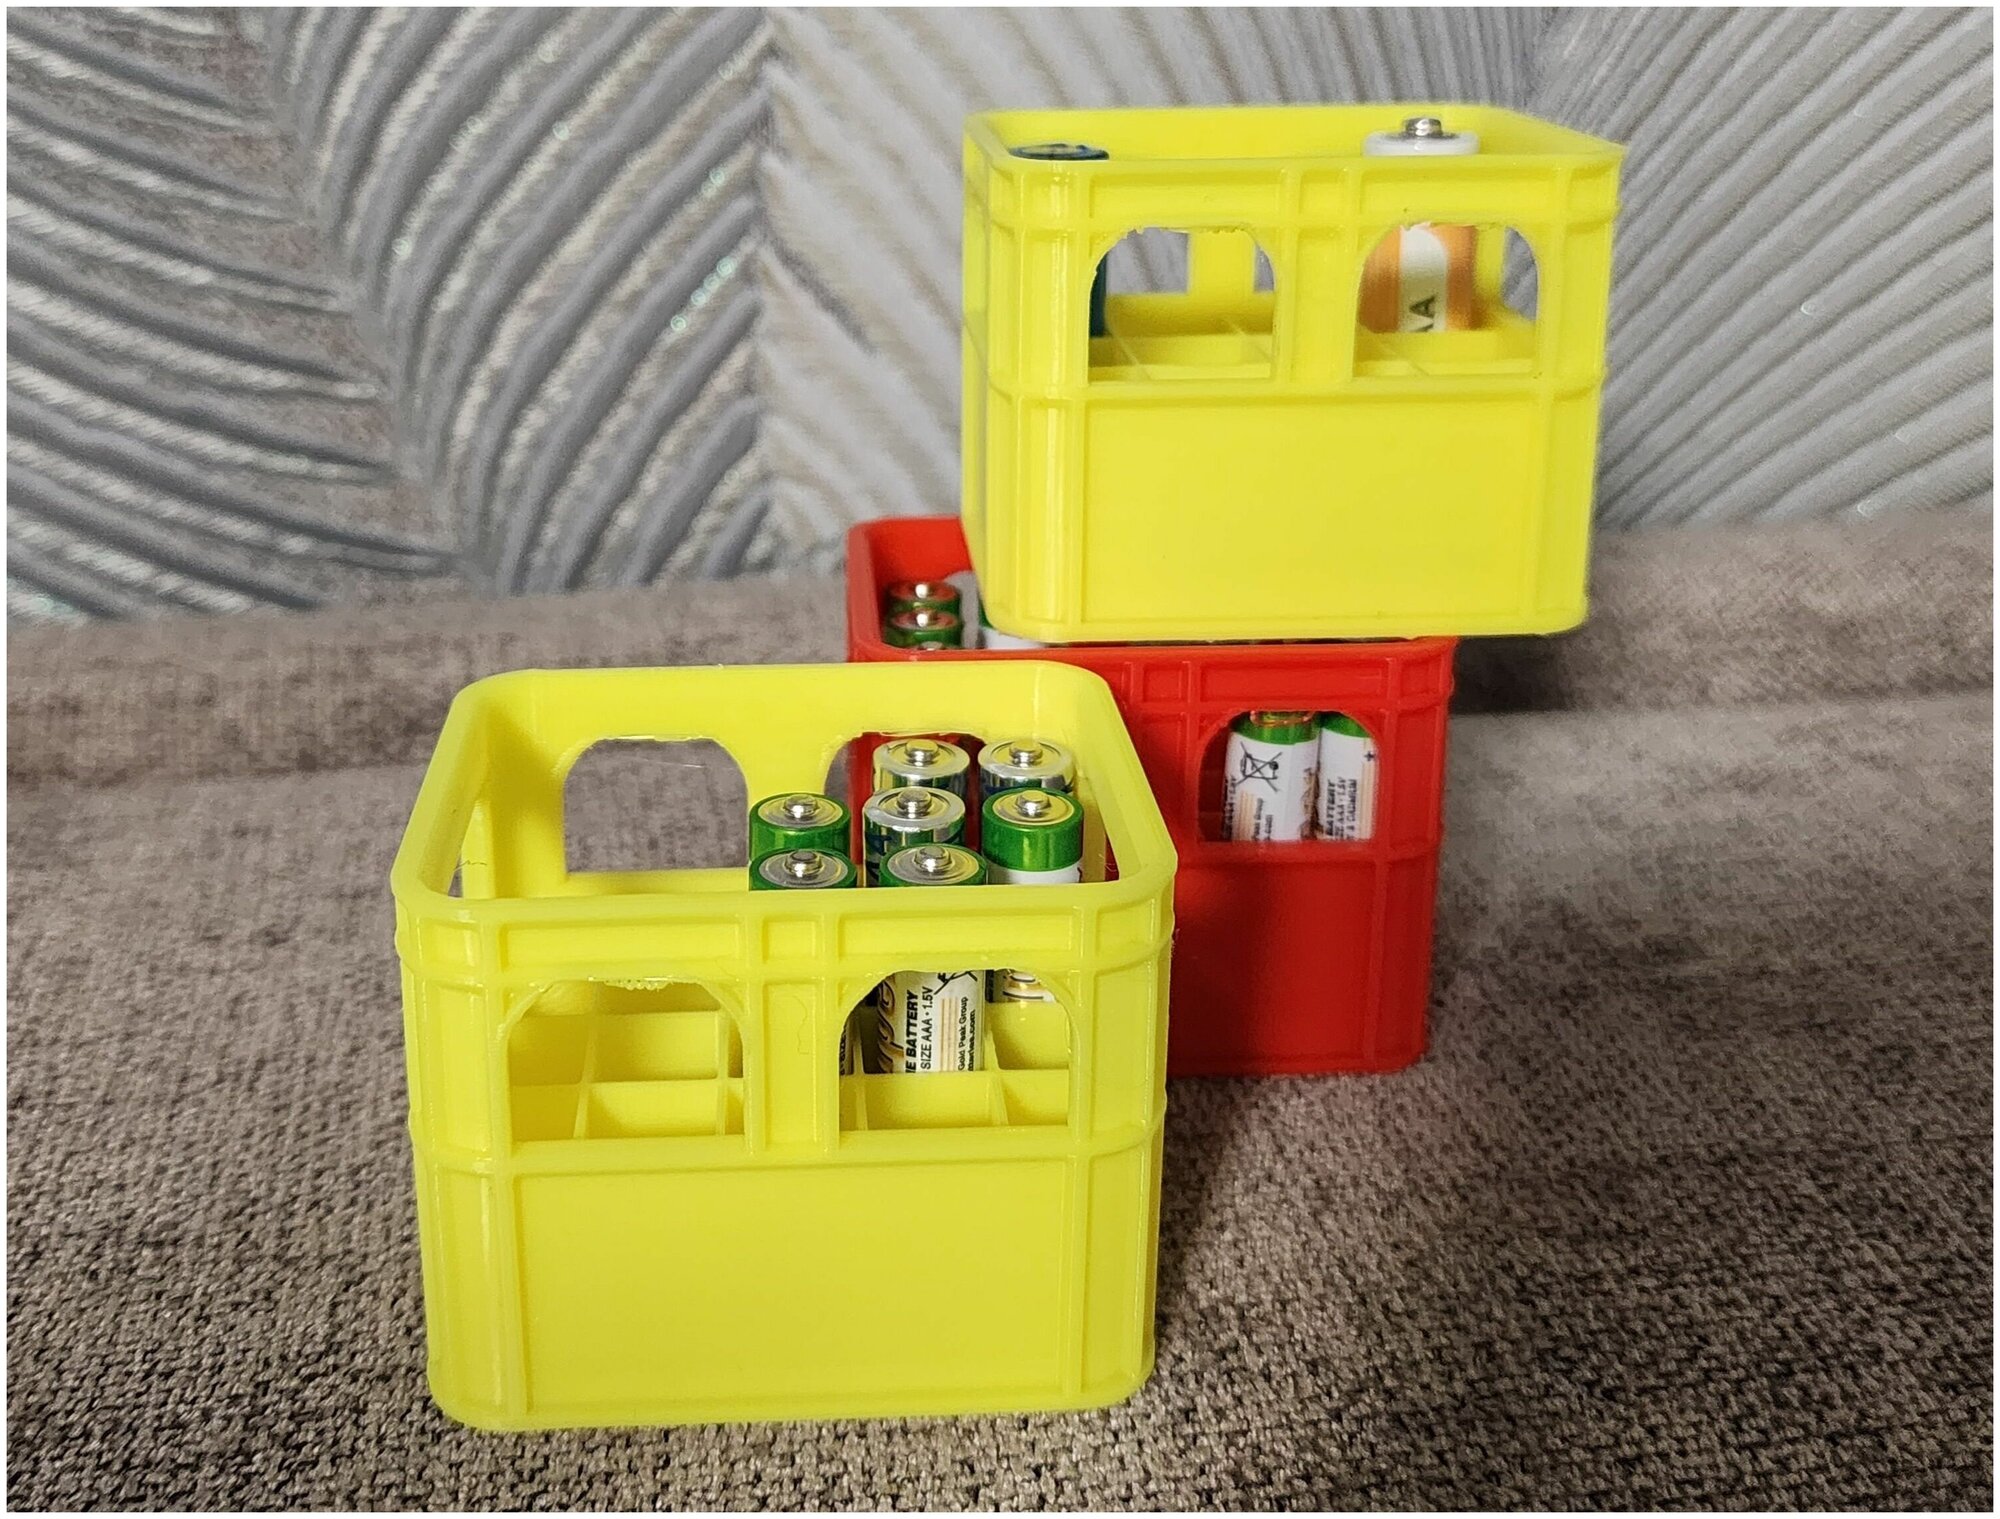 Органайзер / бокс / контейнер для хранения мизинчиковых батареек ААА, цвет желтый - фотография № 5